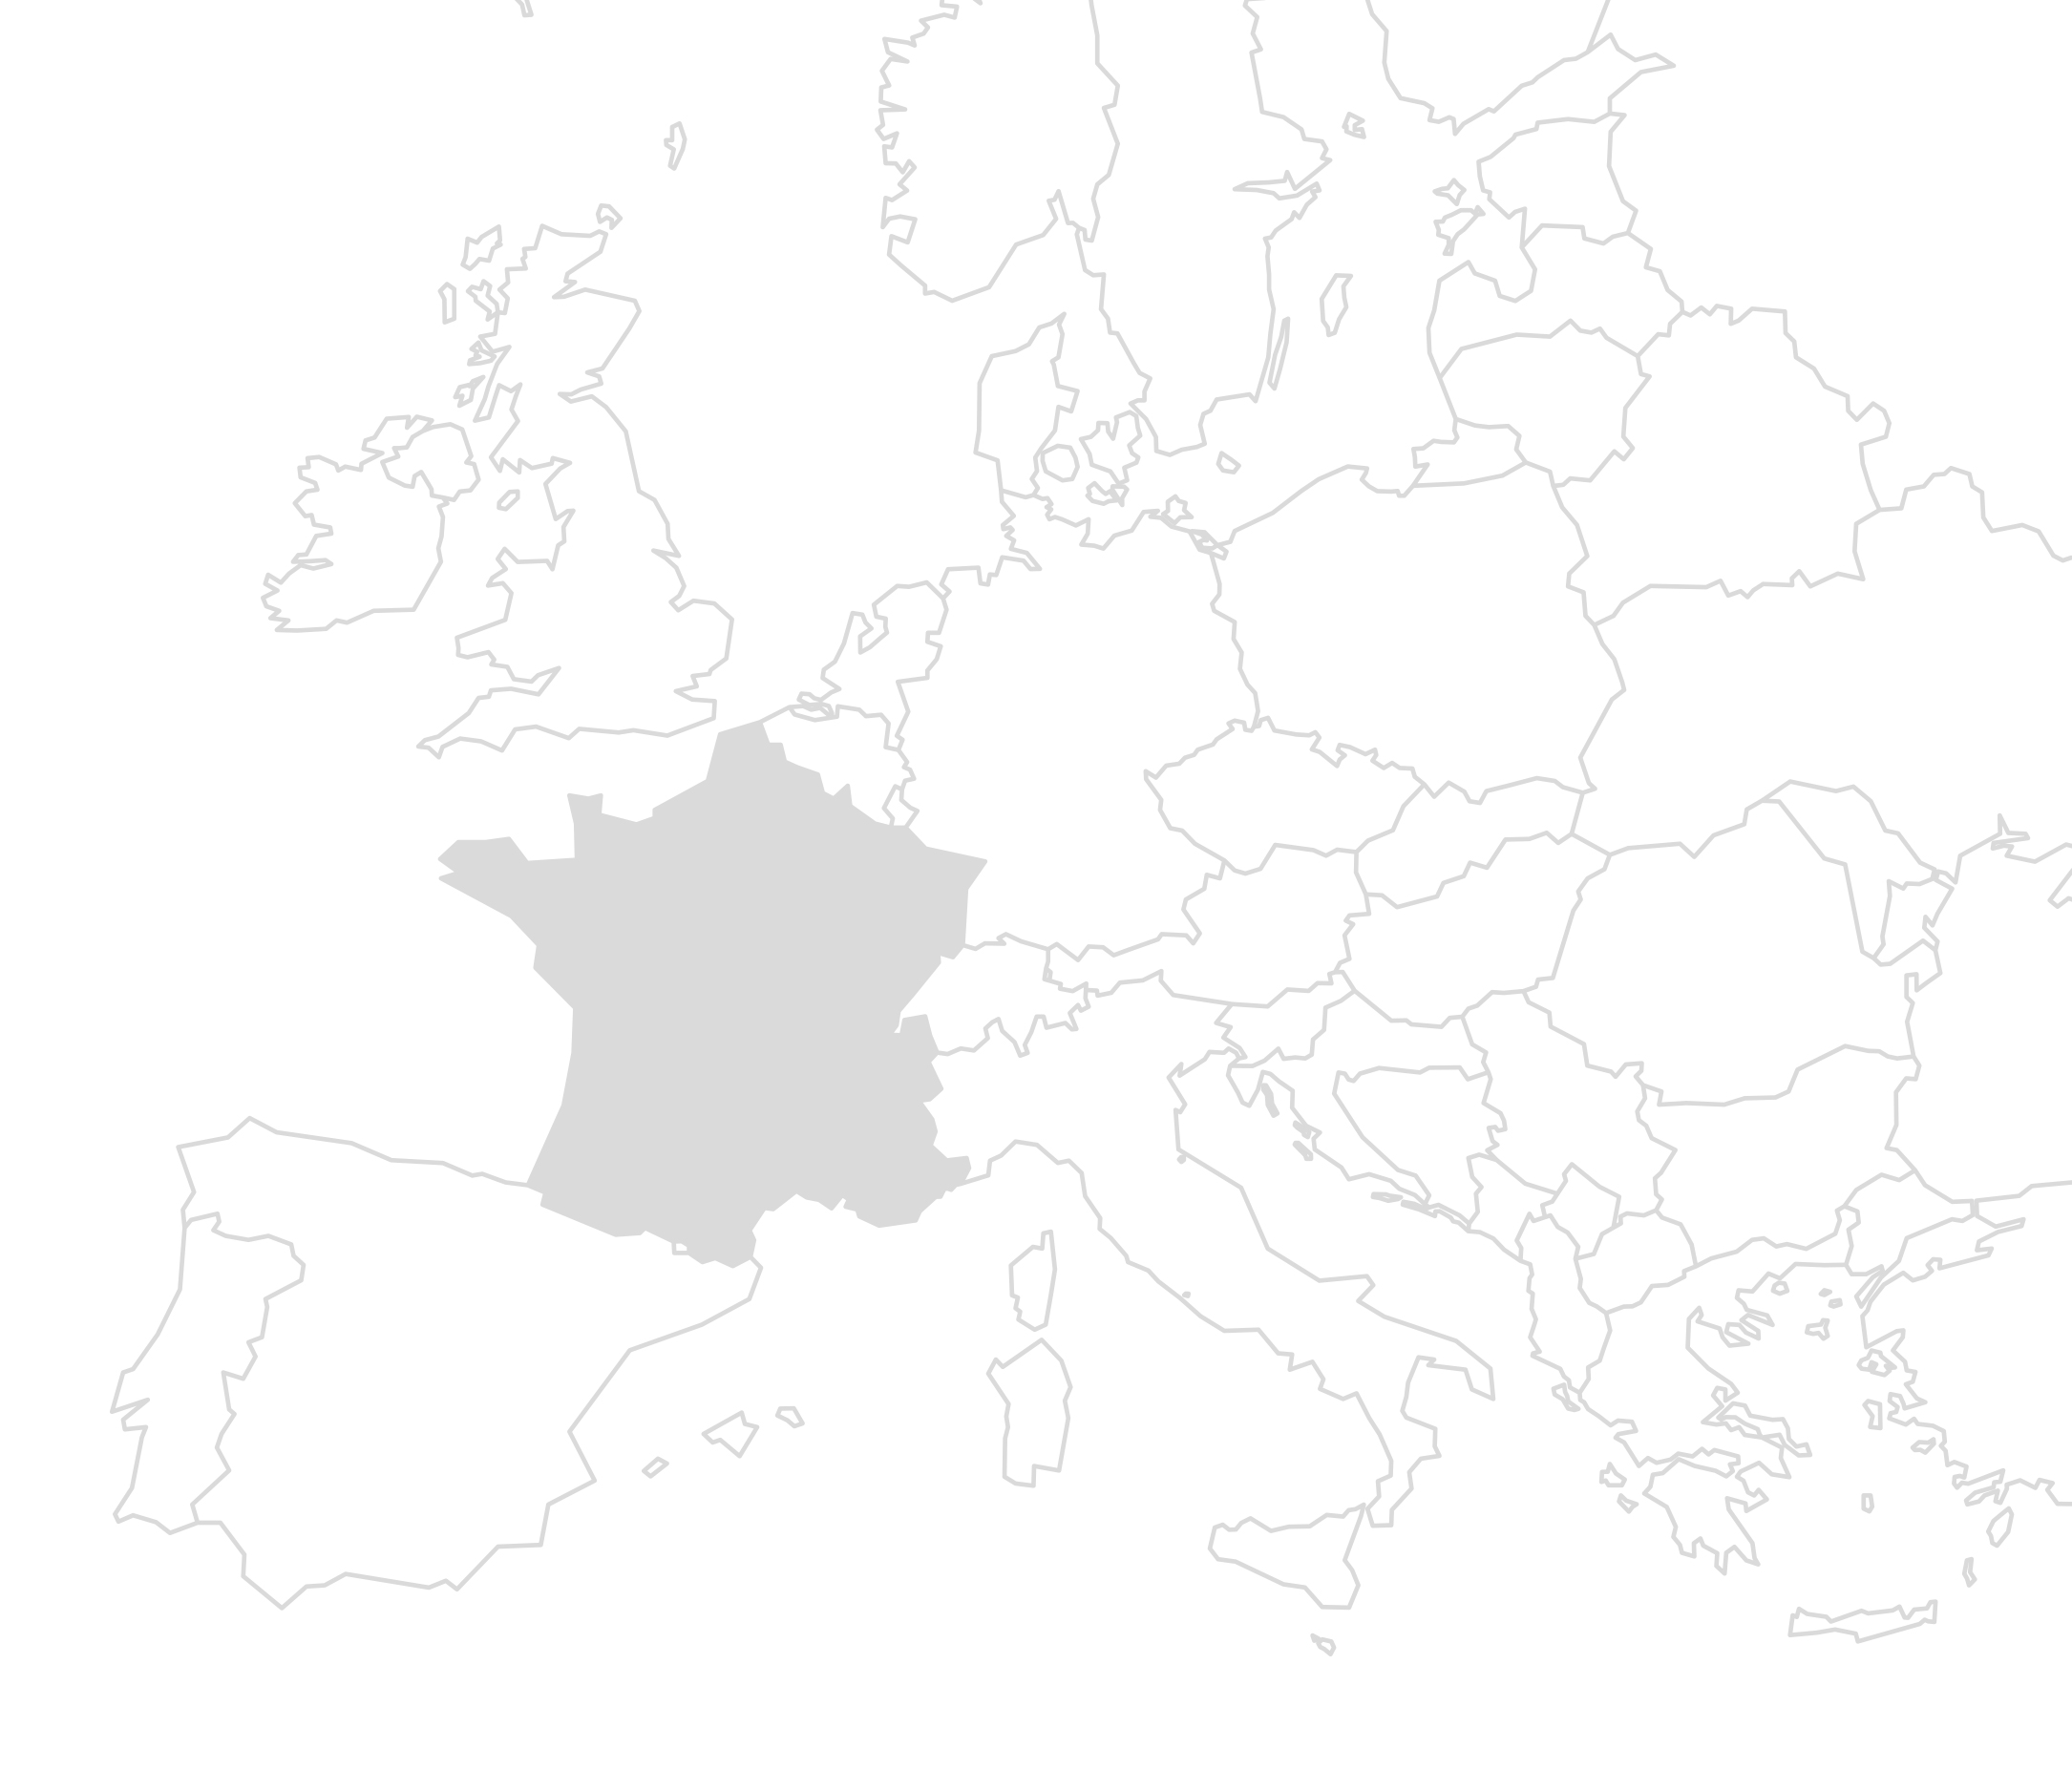 France in EU map